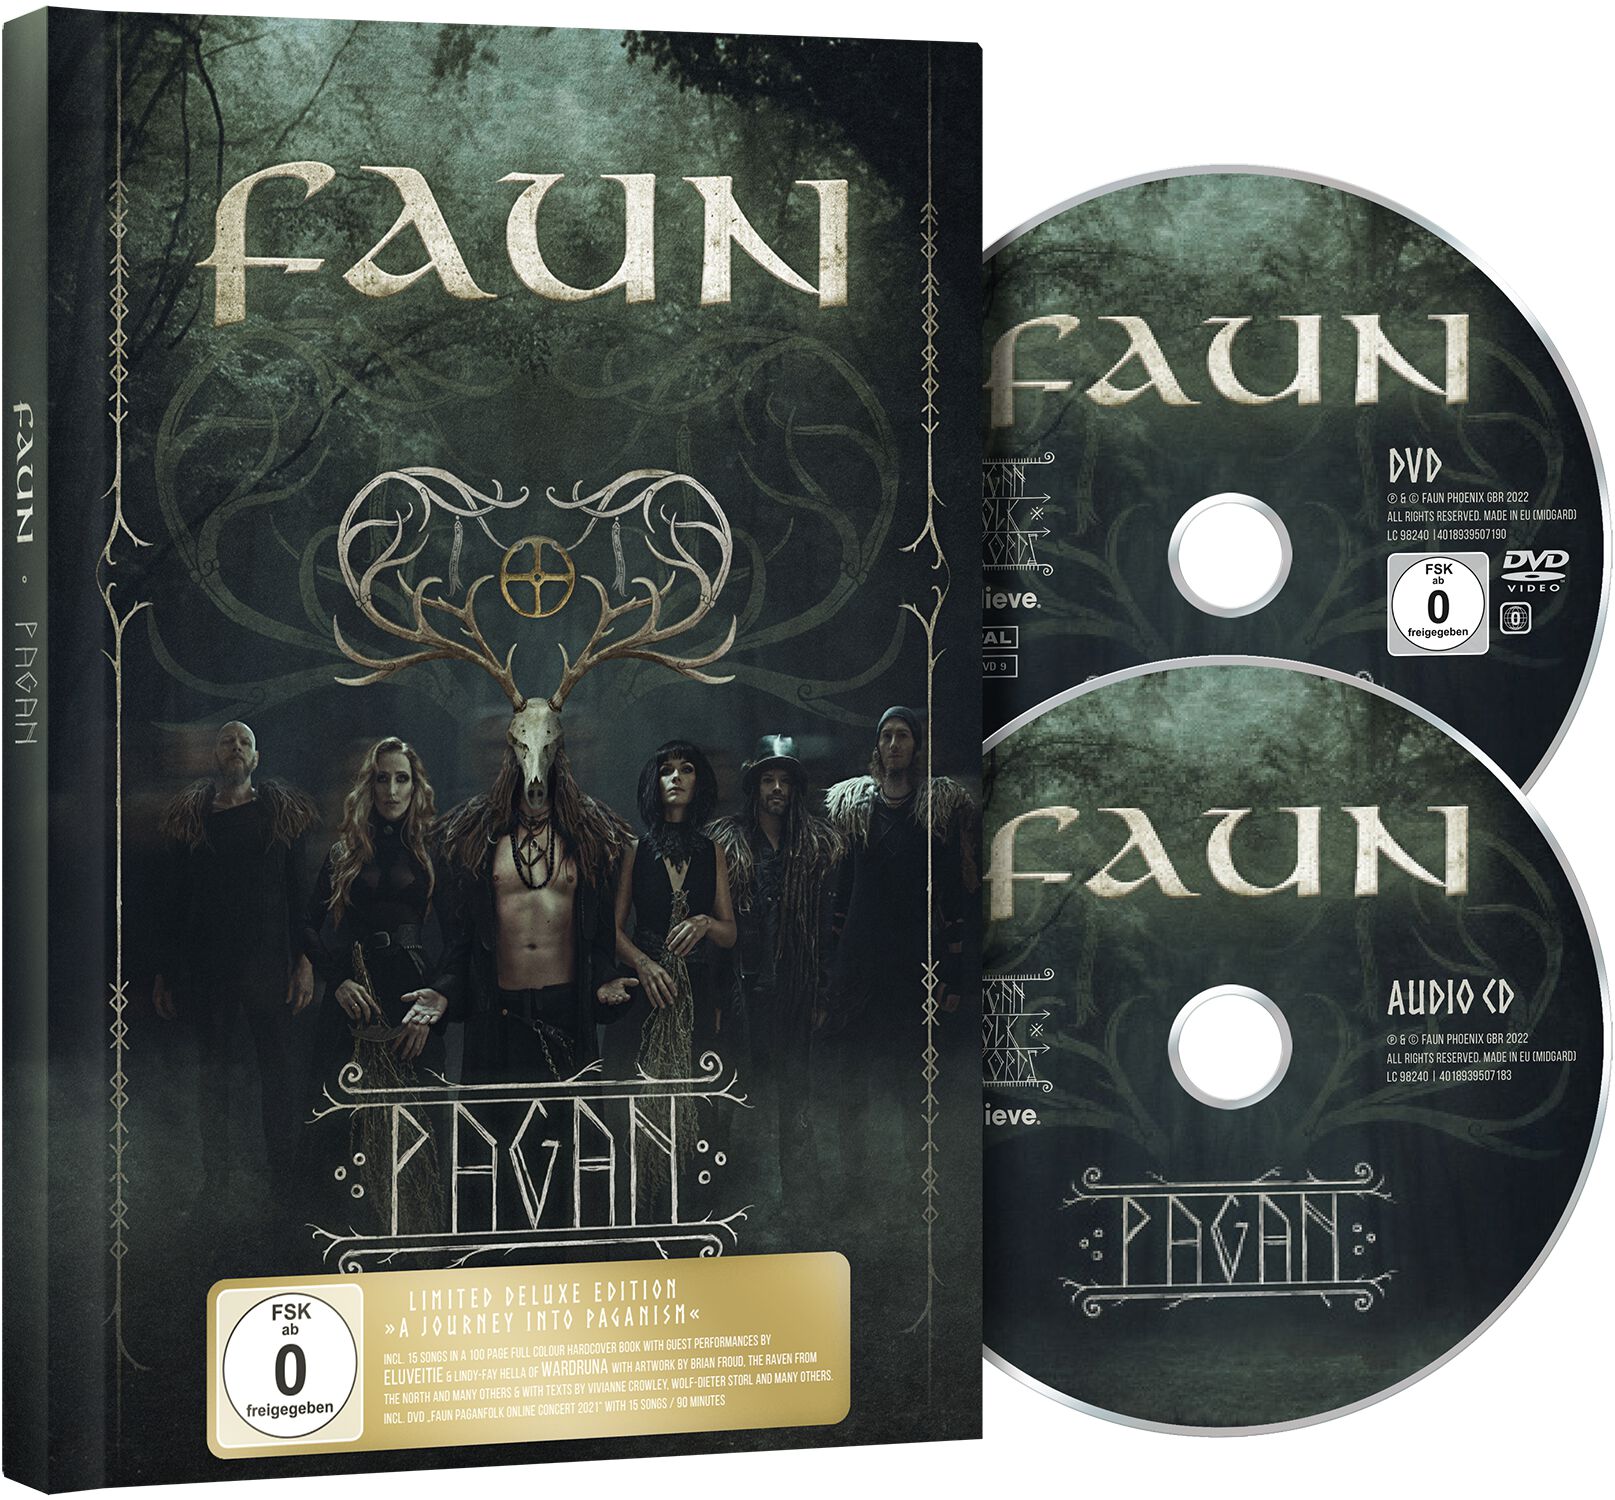 Image of Faun Pagan CD & DVD Standard